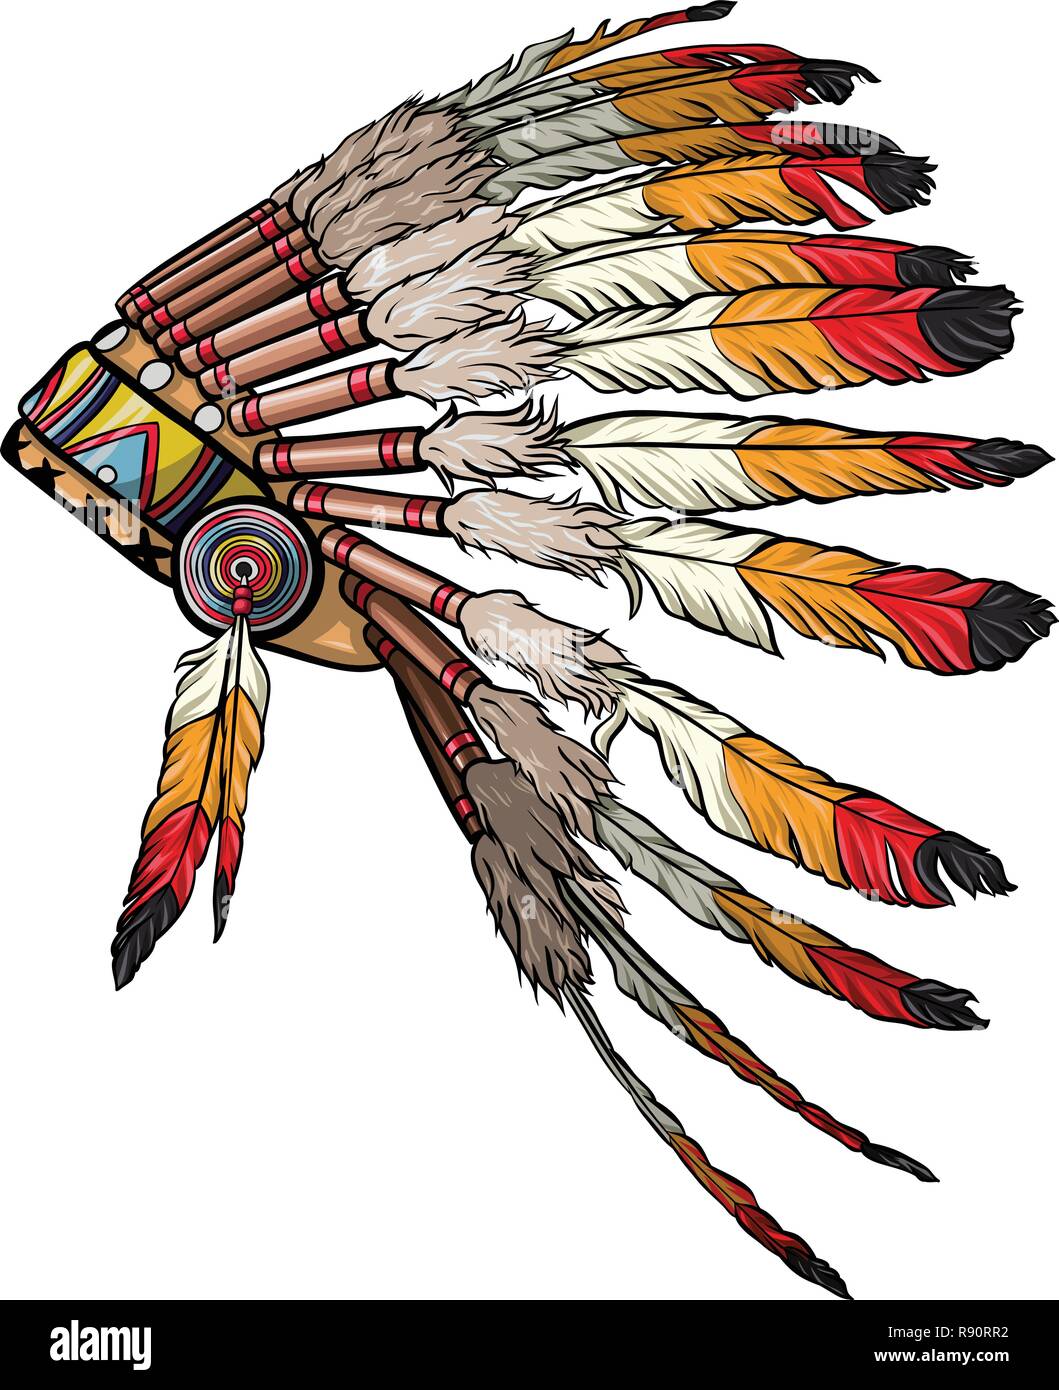 Indian Feather | tyello.com